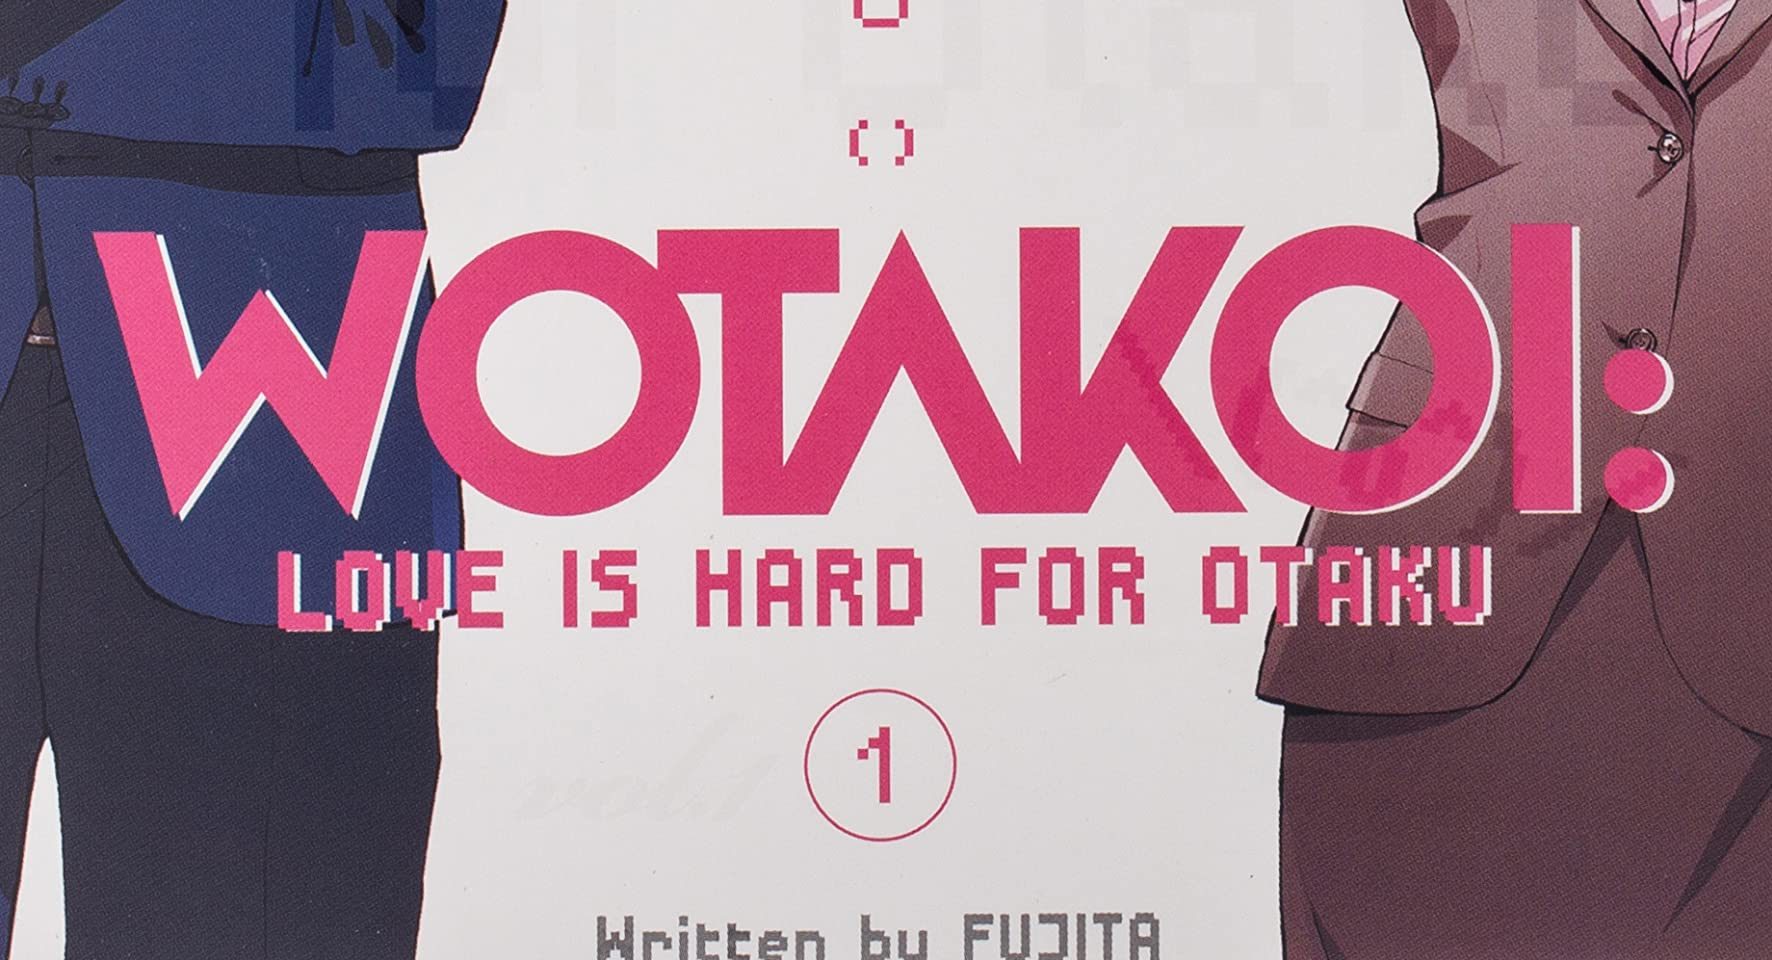 Wotakoi Love Is Hard for Otaku - Hanako and Tarō 1 Poster for